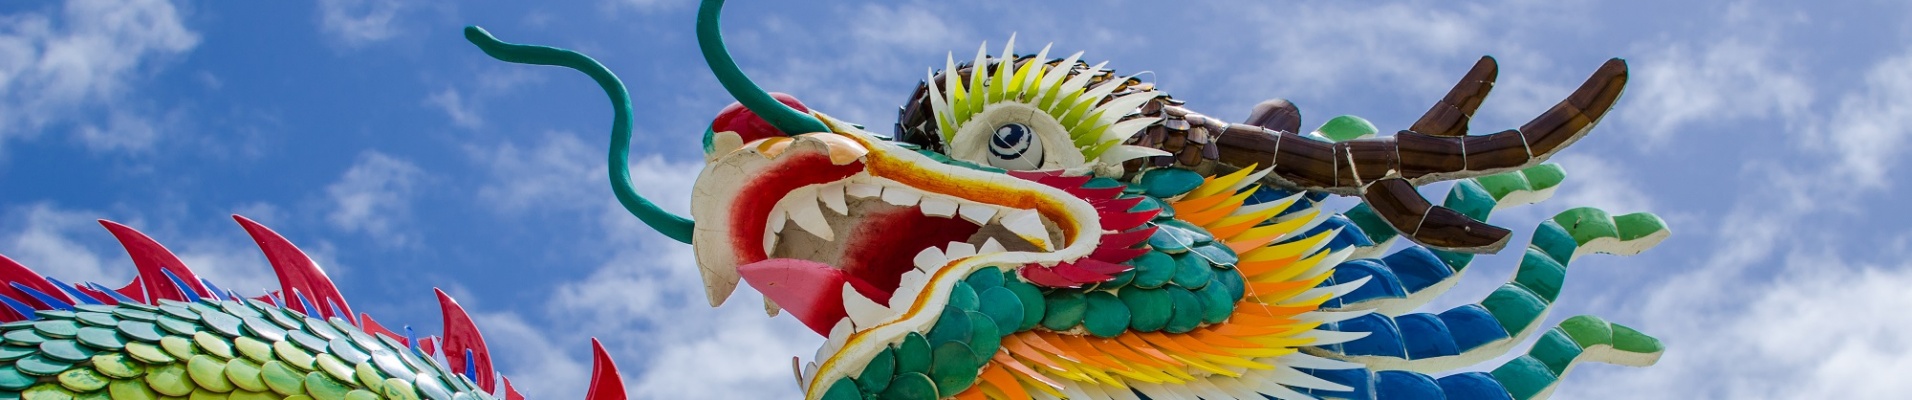 Dragon chinois coloré